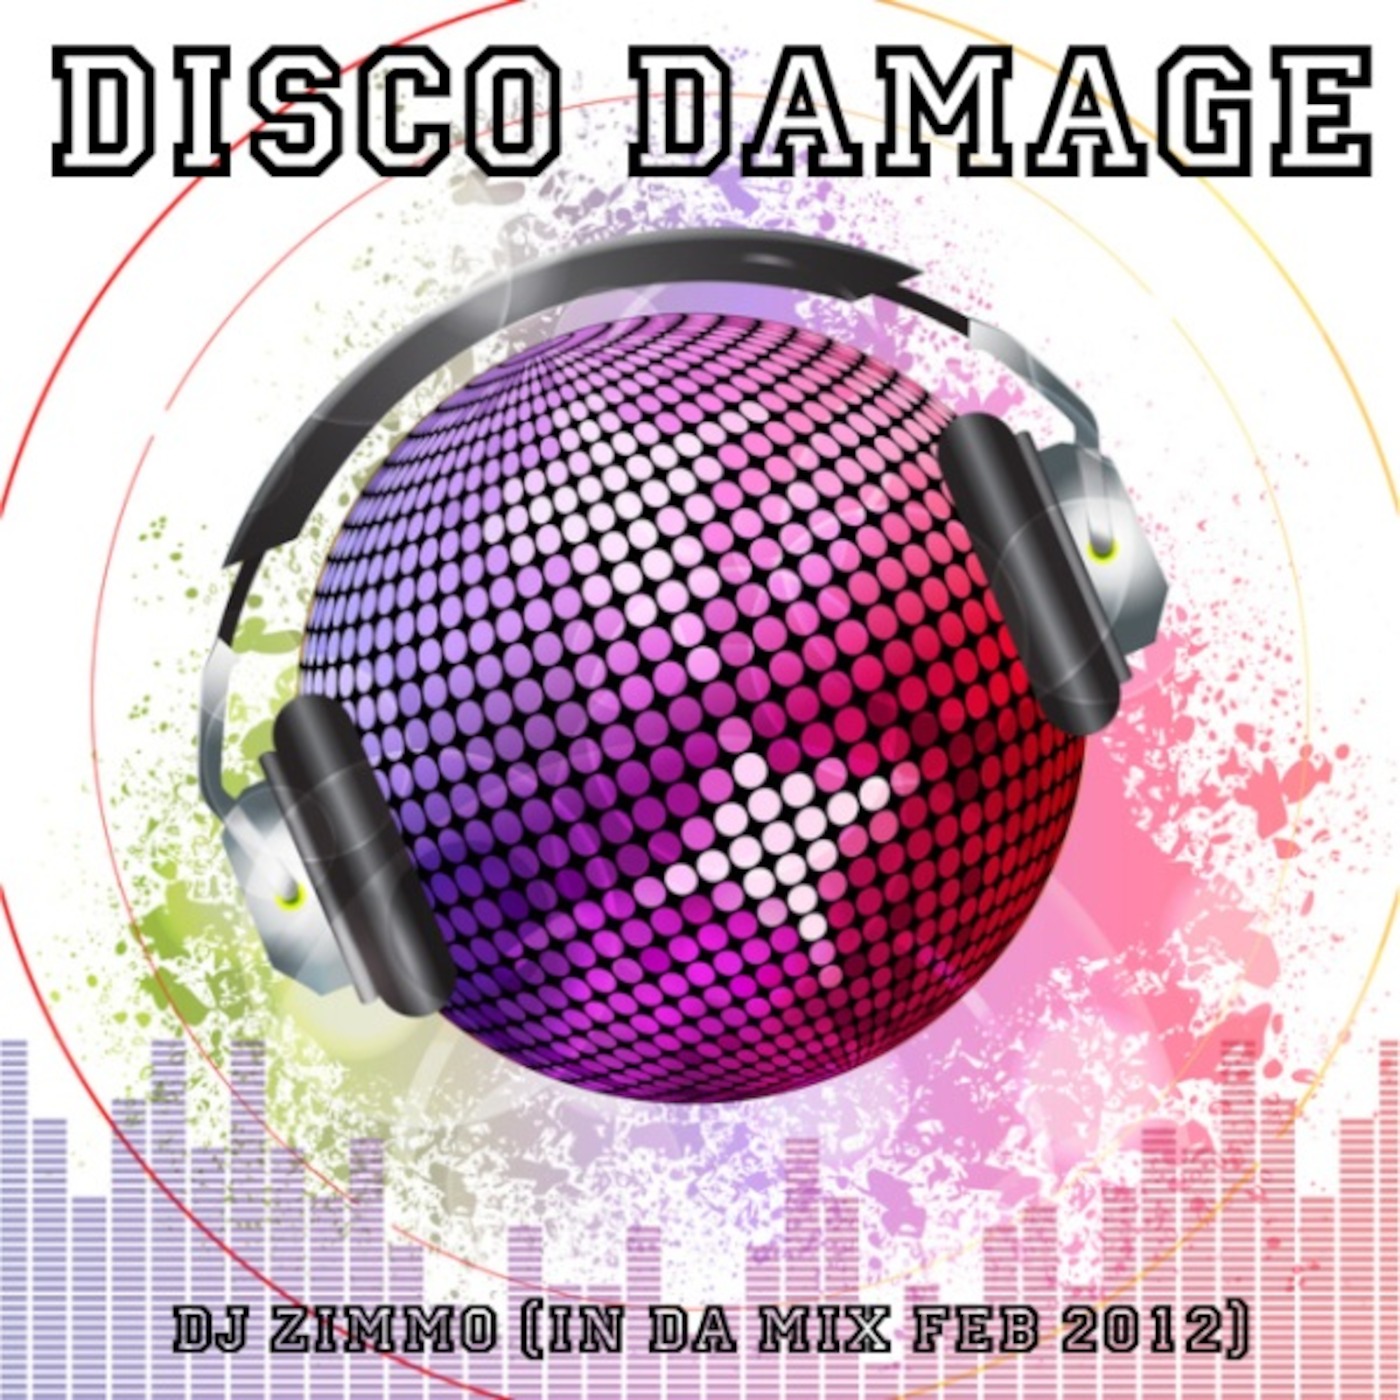 Disco Damage - February 2012